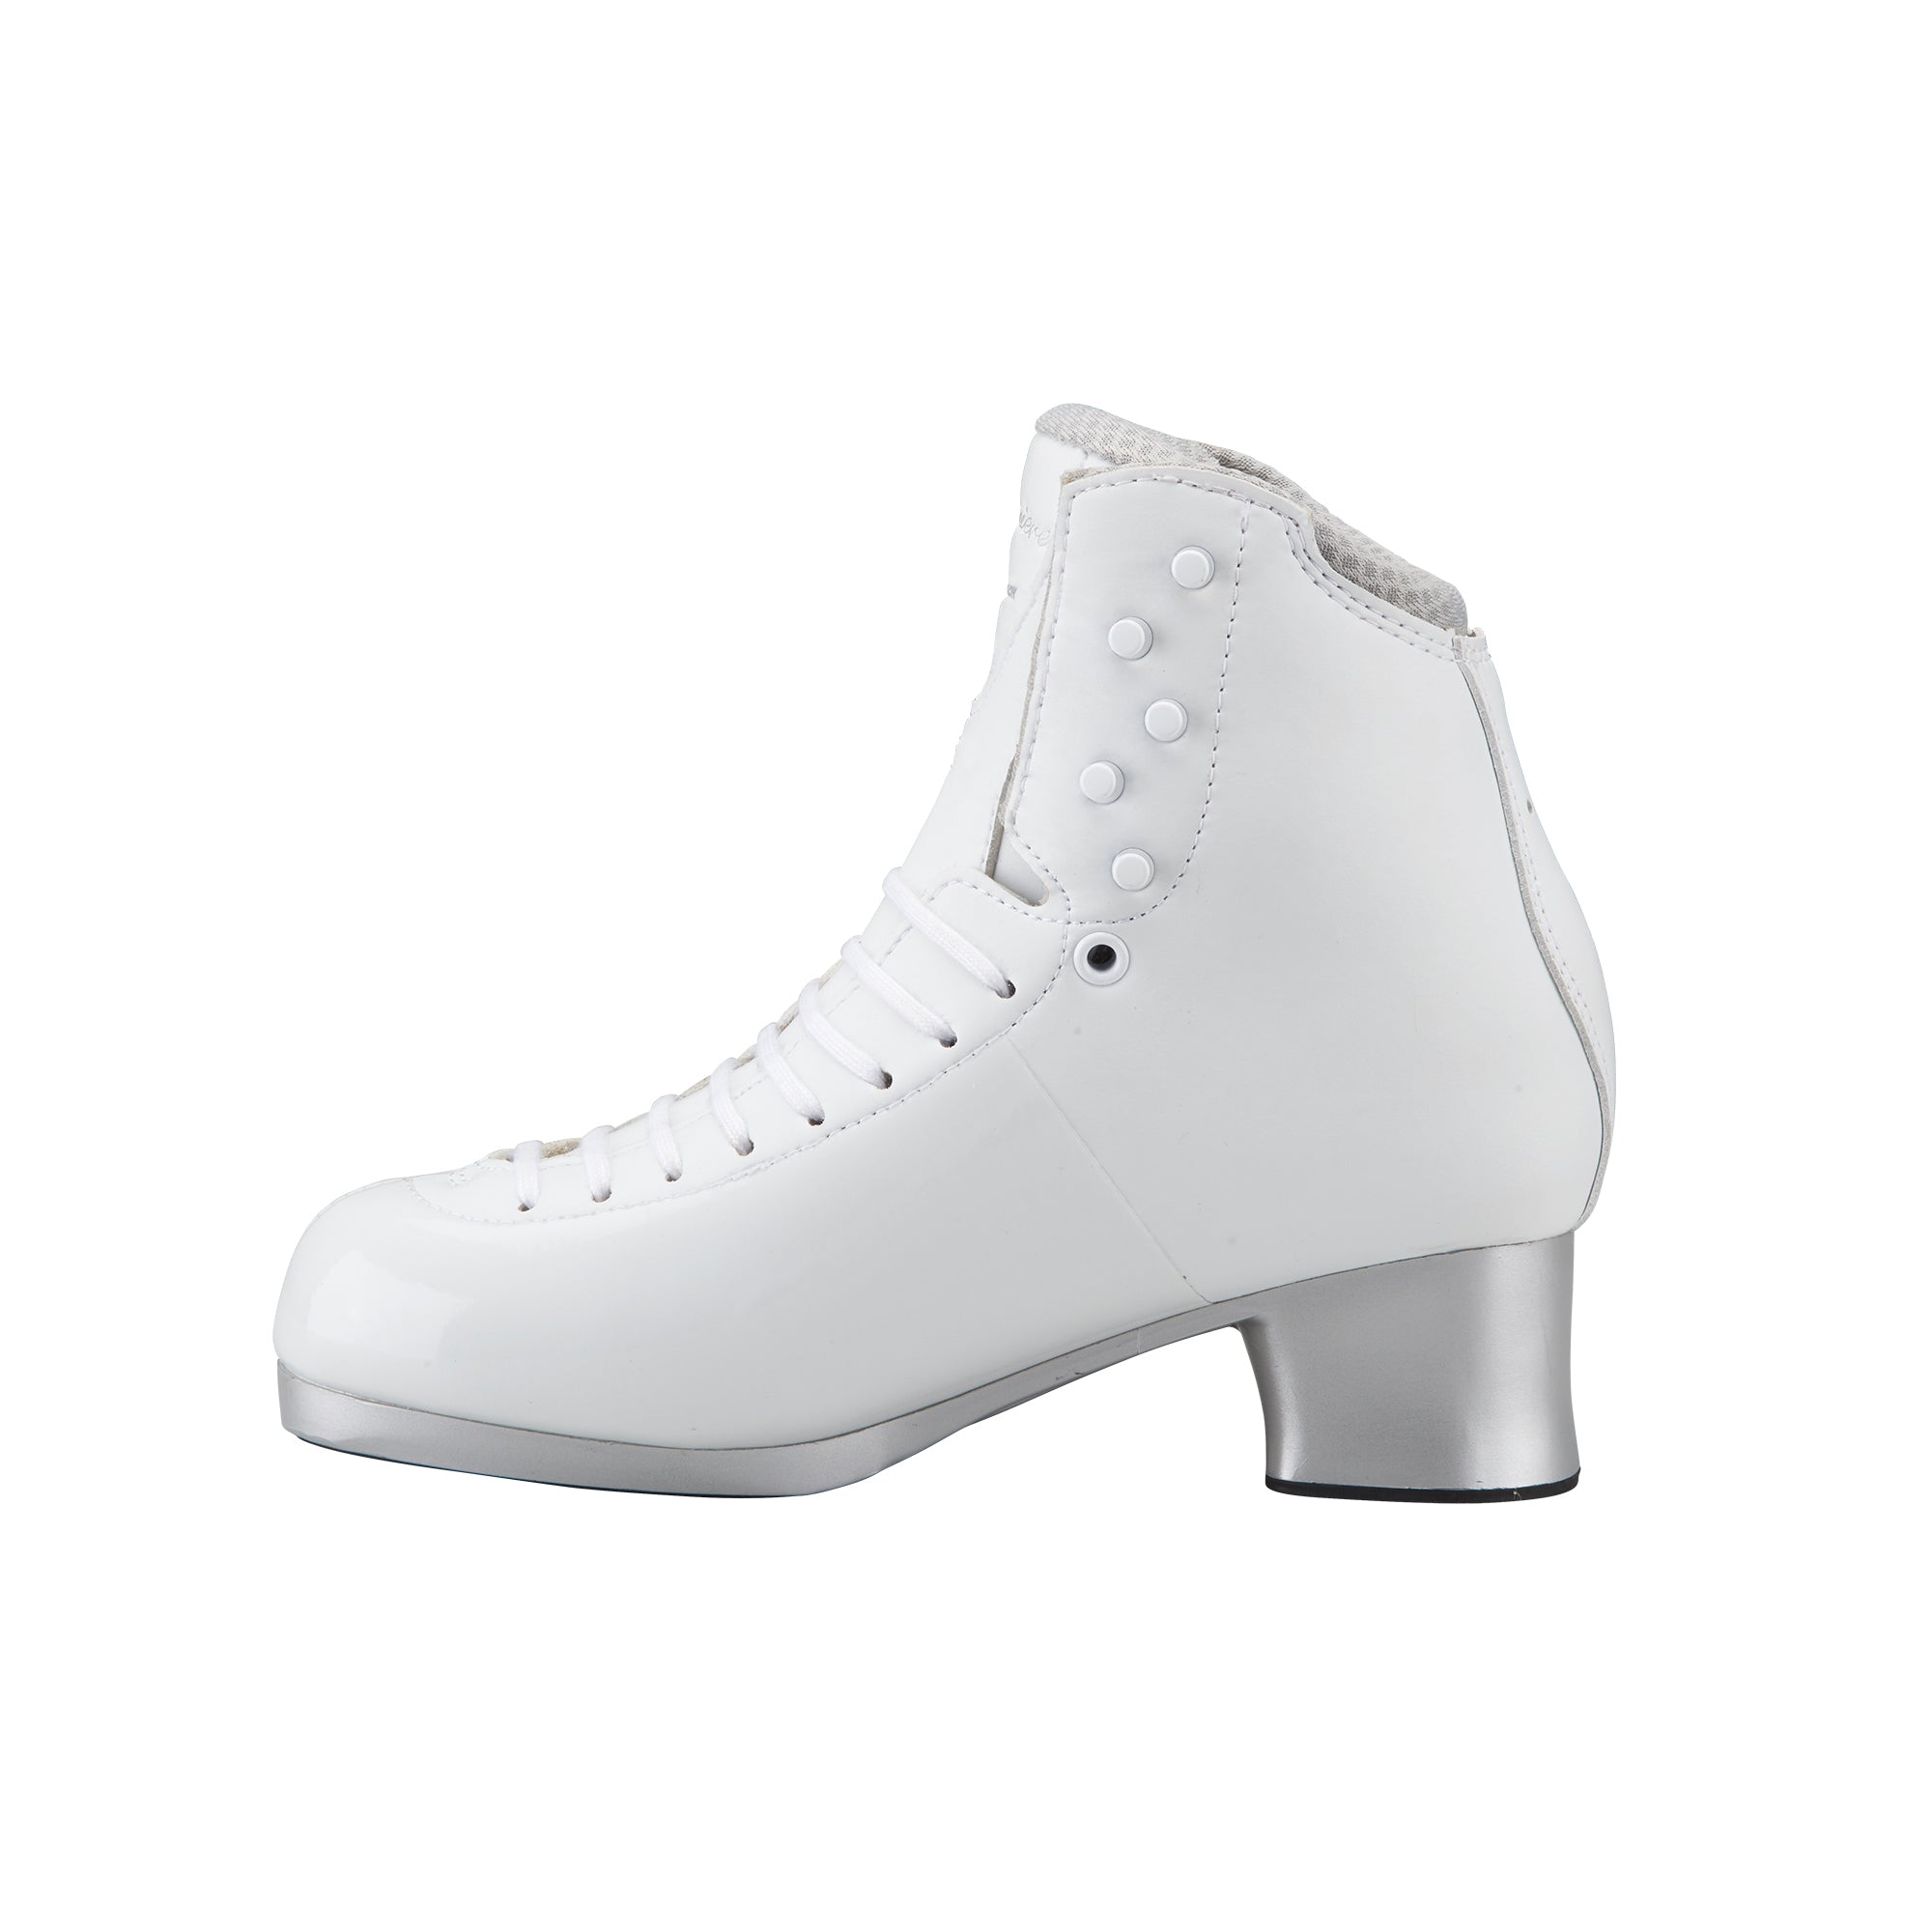 Jackson Premiere 2800 White Figure Skate Boot